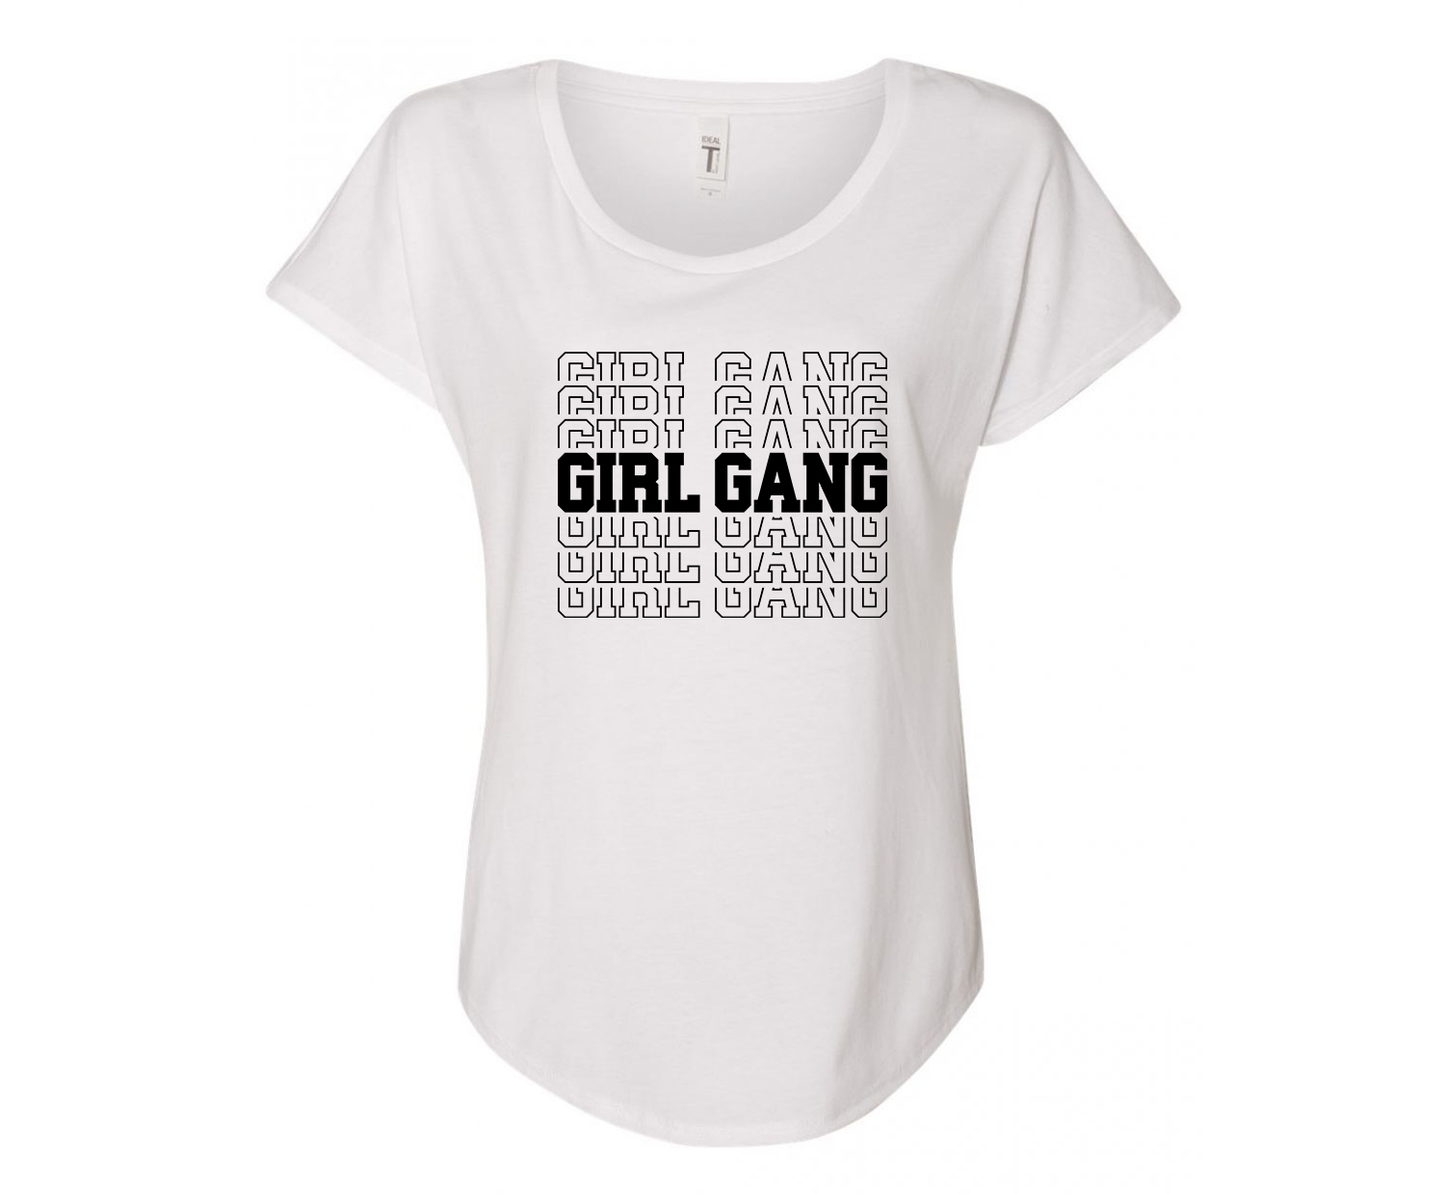 Athletic Style Girl Gang Ladies Tee Shirt - In Grey & White